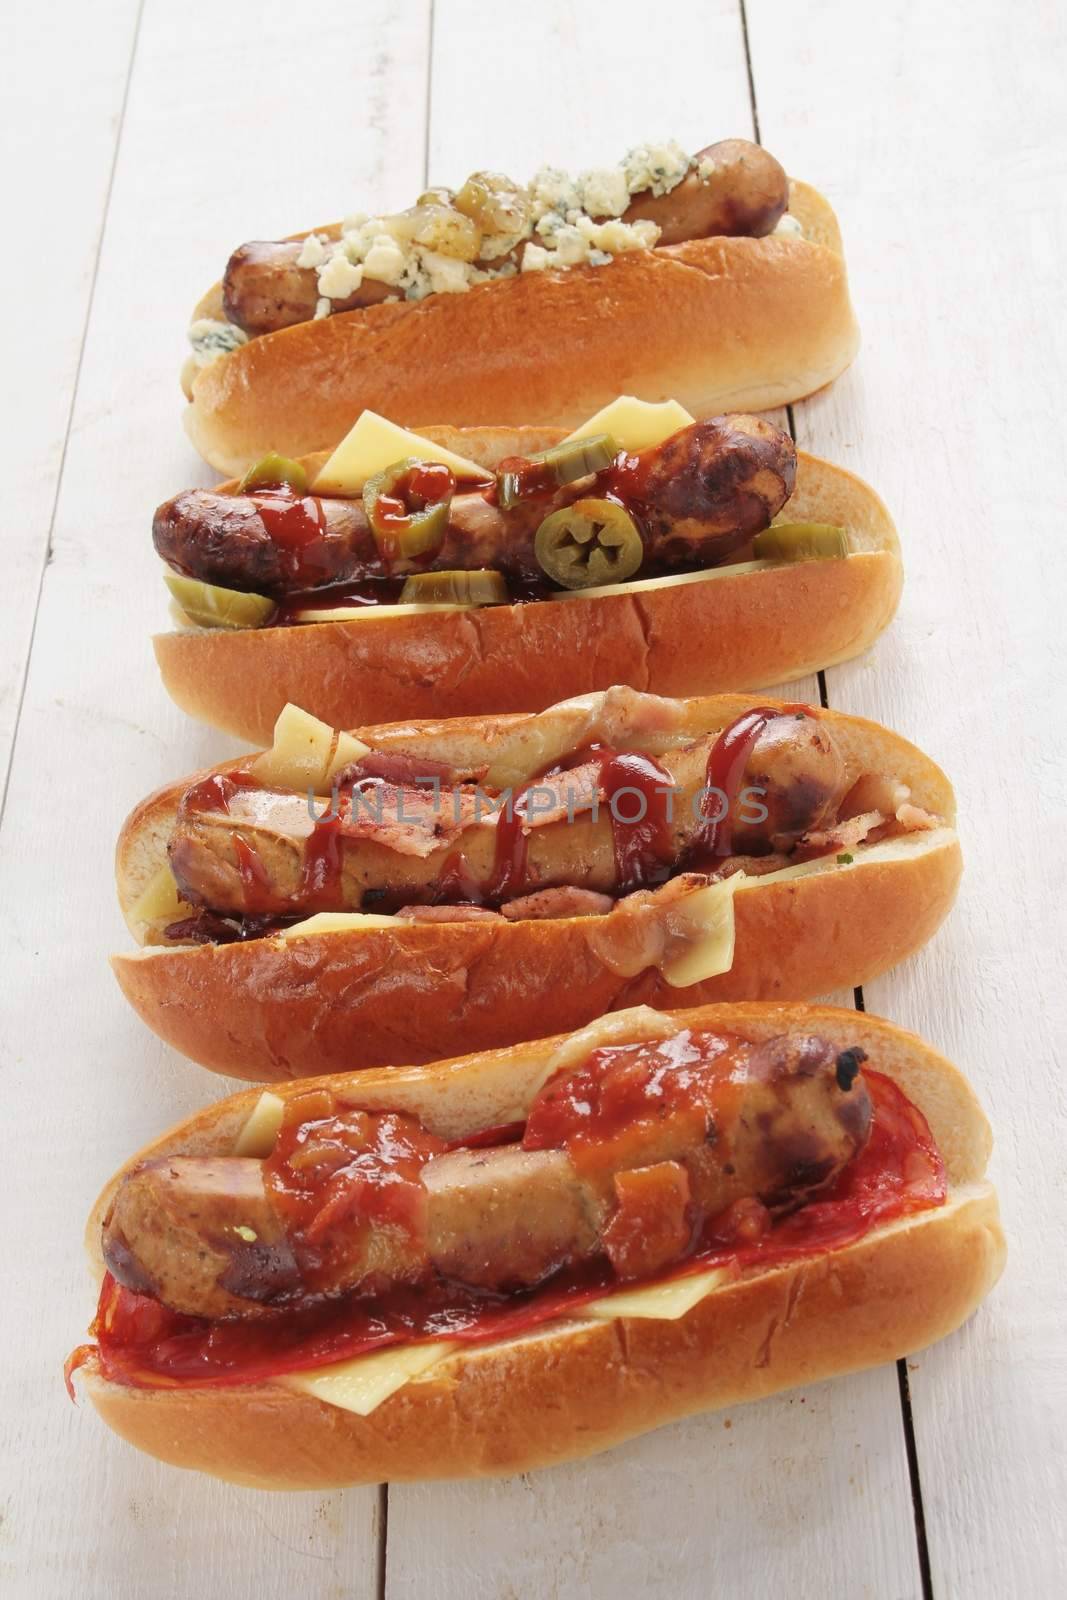 hotdog selection by neil_langan